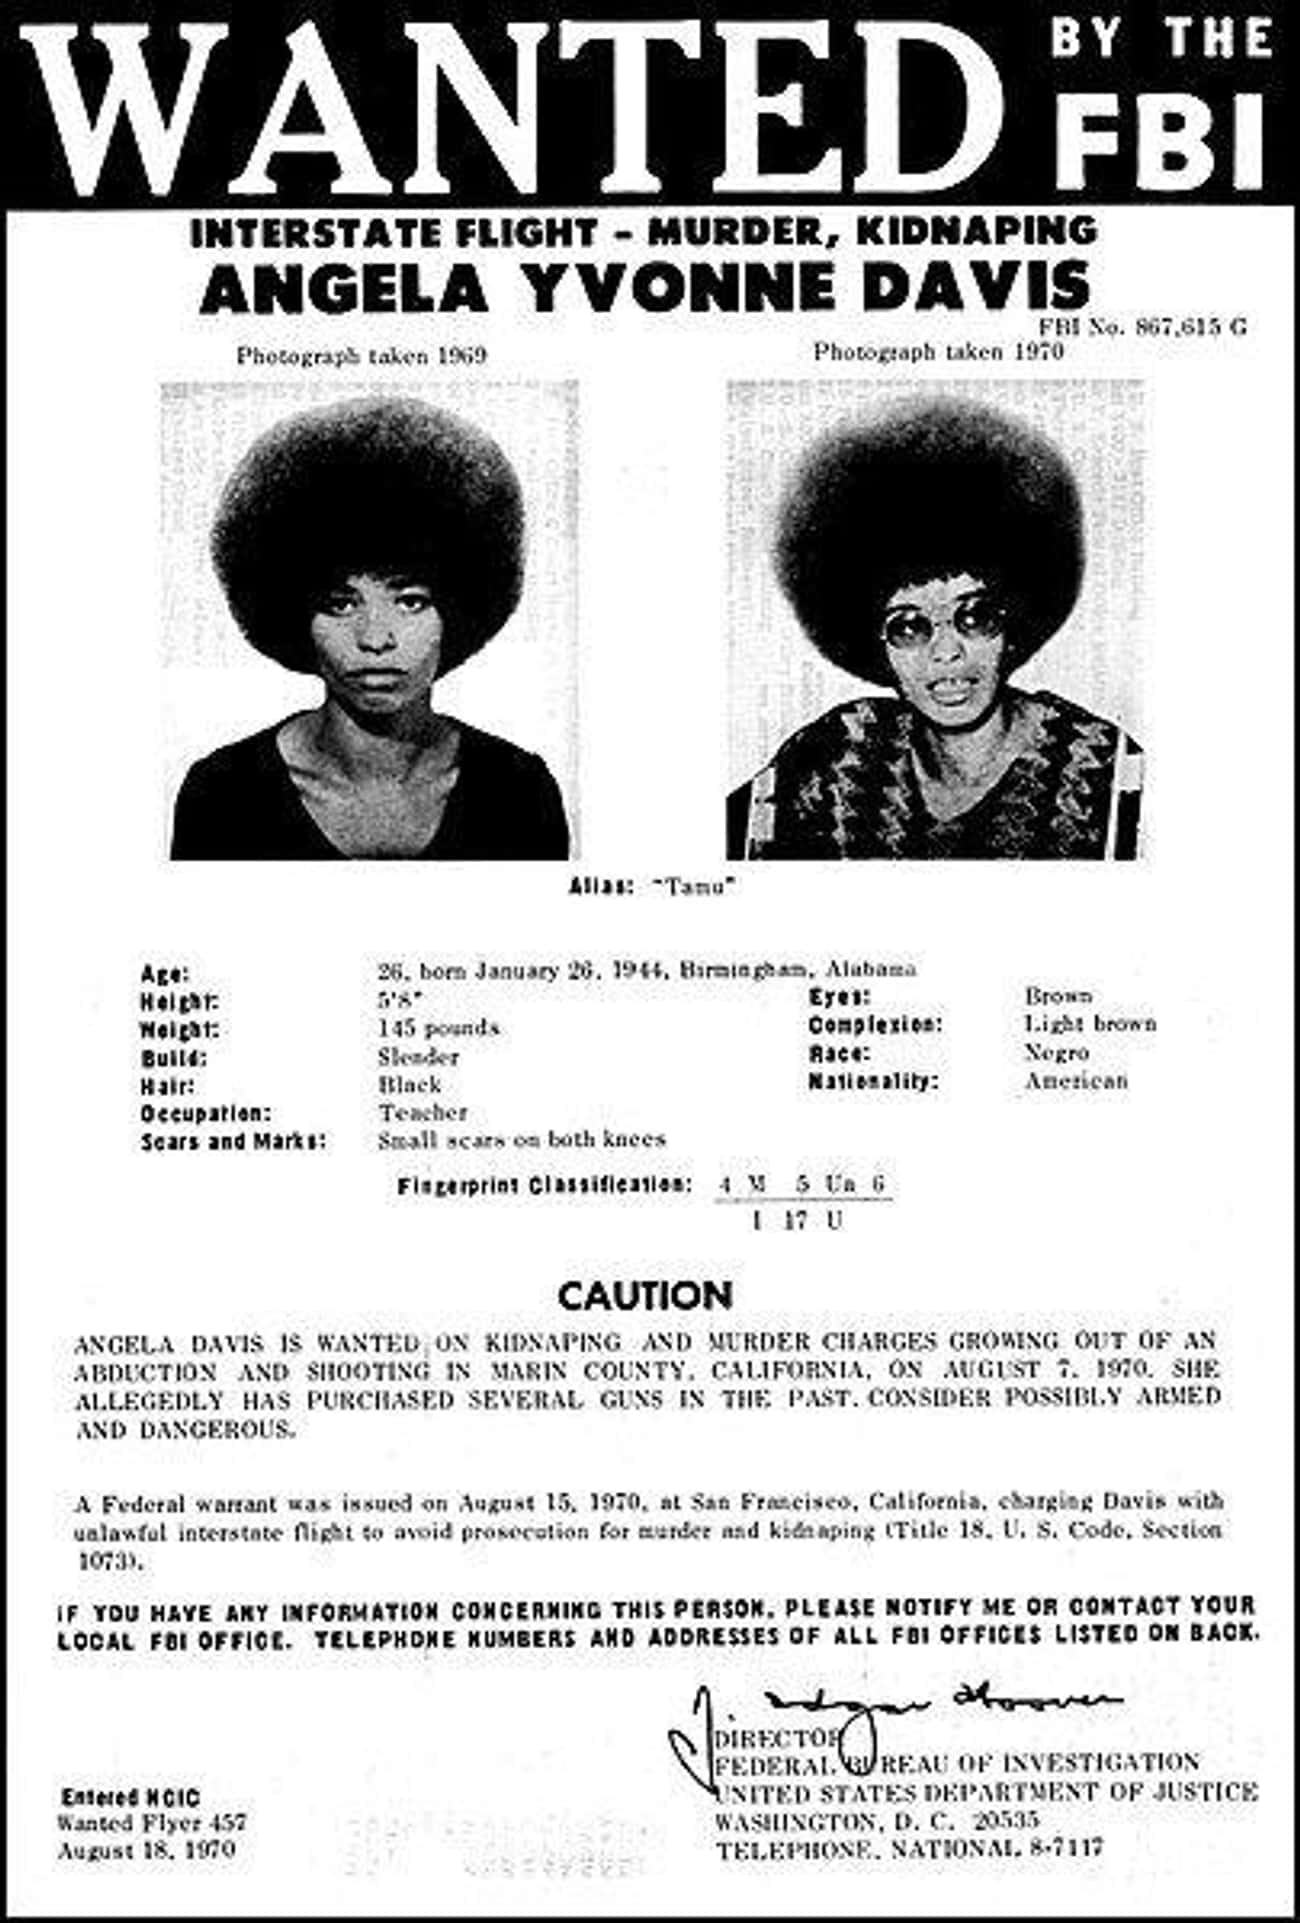 Angela Yvonne Davis: Added 8/18/70, Arrested 10/13/70 